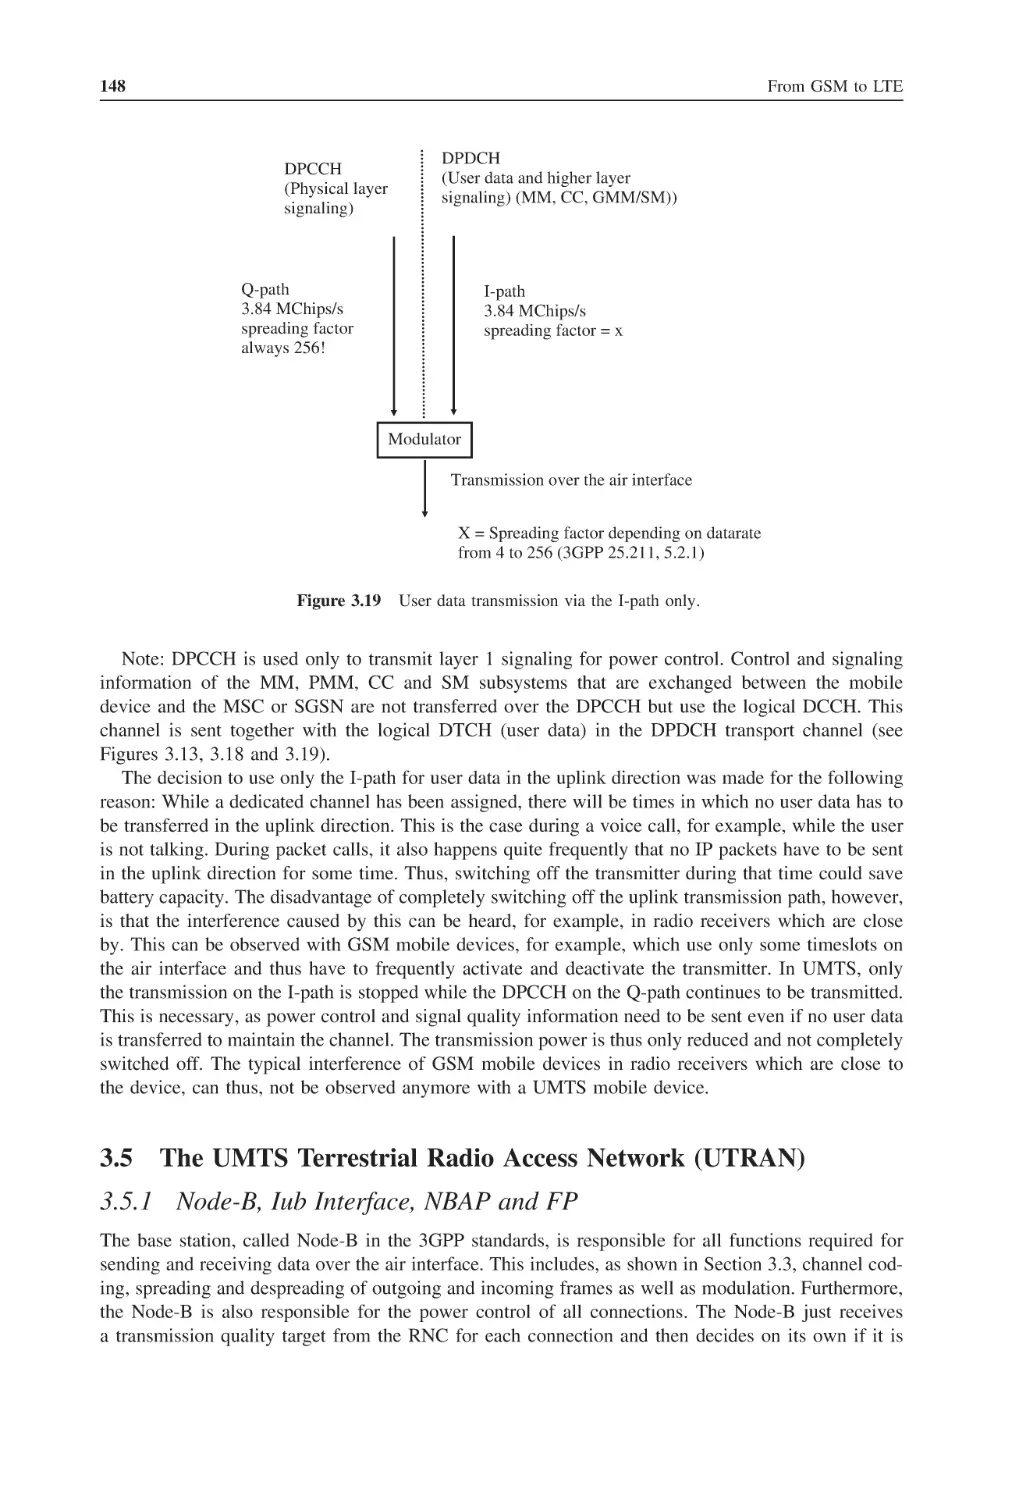 3.5 The UMTS Terrestrial Radio Access Network (UTRAN)
3.5.1 Node-B, Iub Interface, NBAP and FP